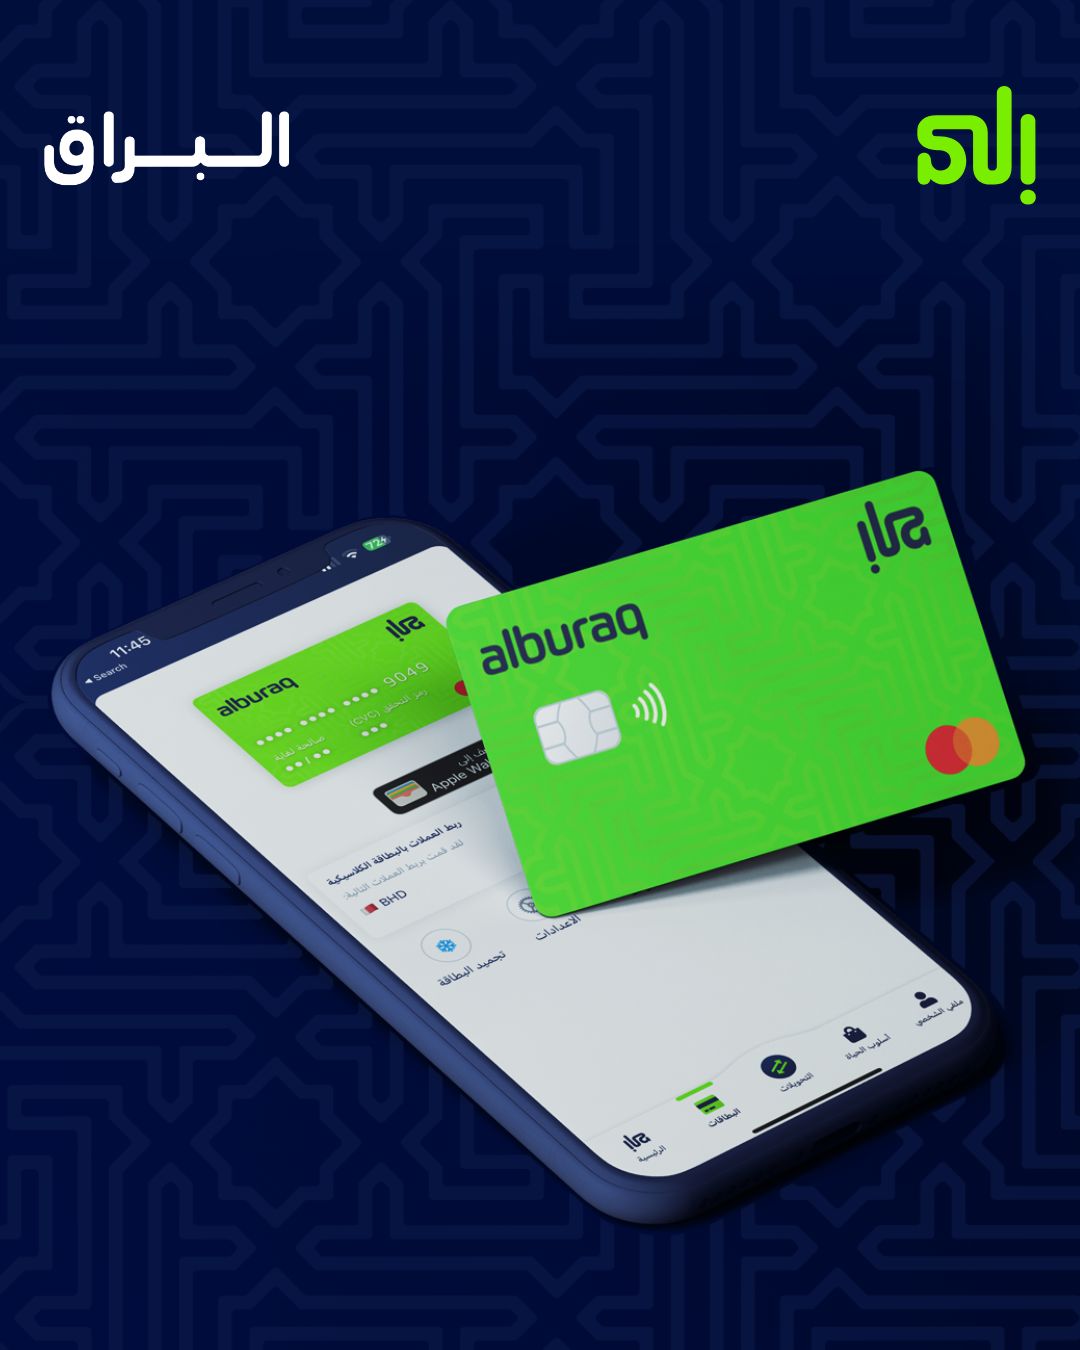 ila Bank Launches ‘alburaq' – a New Islamic Banking Experience in Bahrain